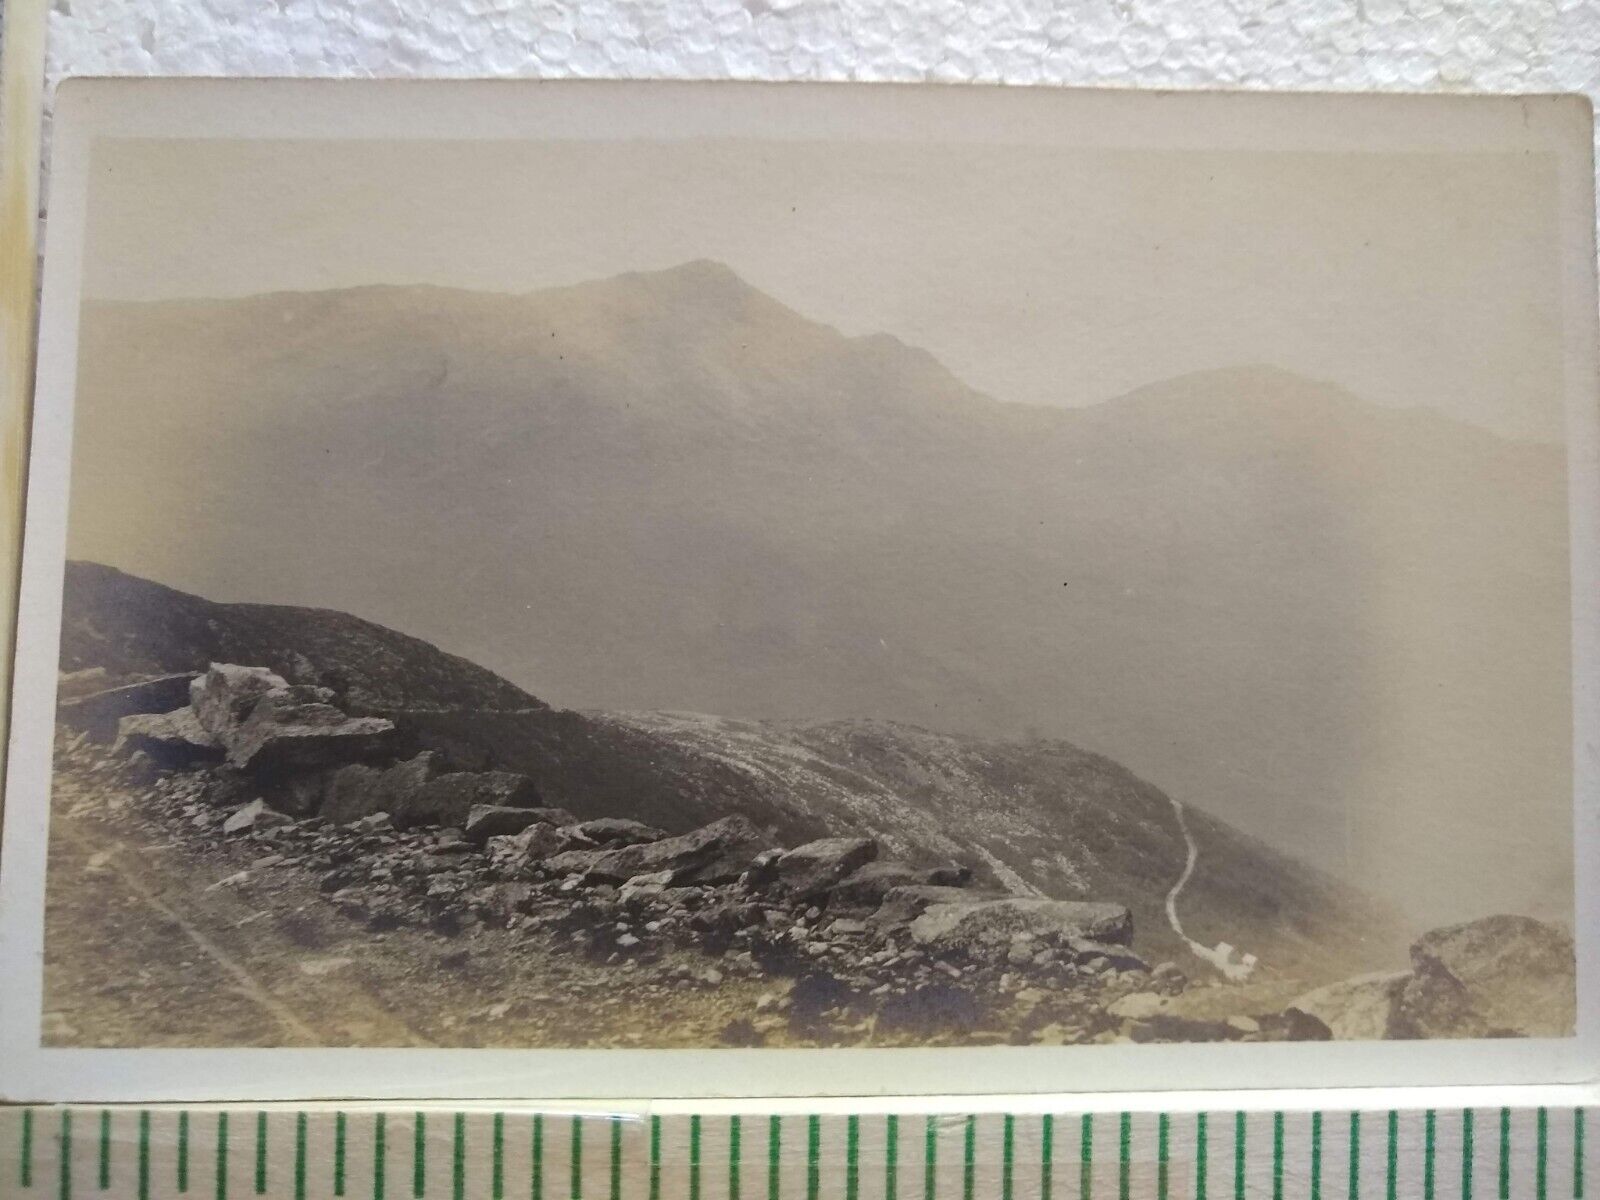 Postcard Vintage/Old Picture of a Mountain/Landscape Scene